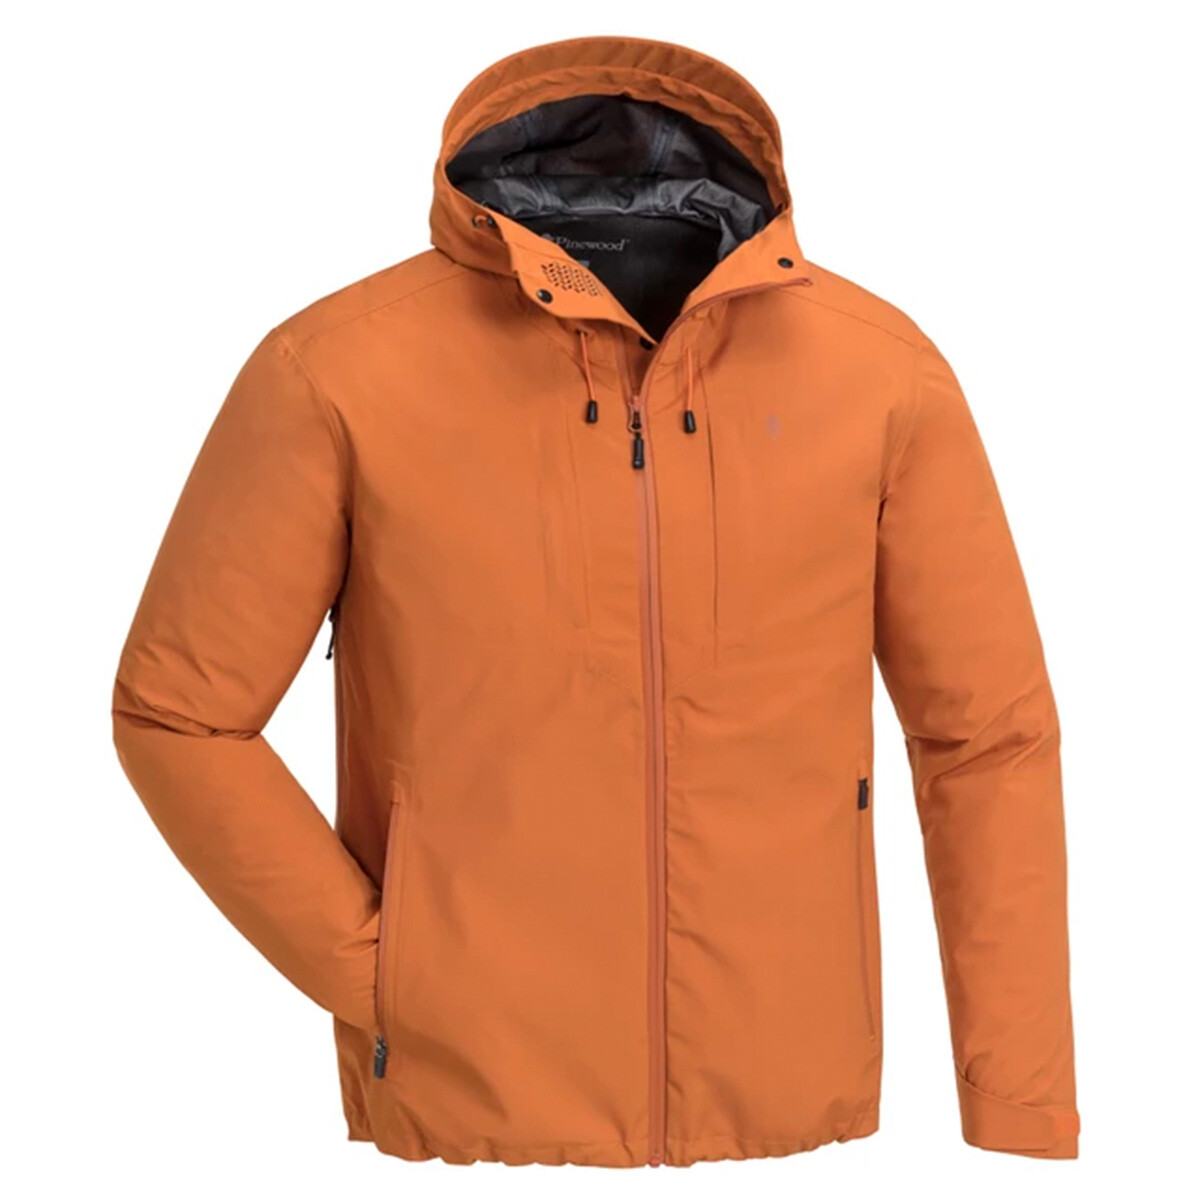 Se Pinewood Telluz jakke (Burned Orange, M) hos Specialbutikken